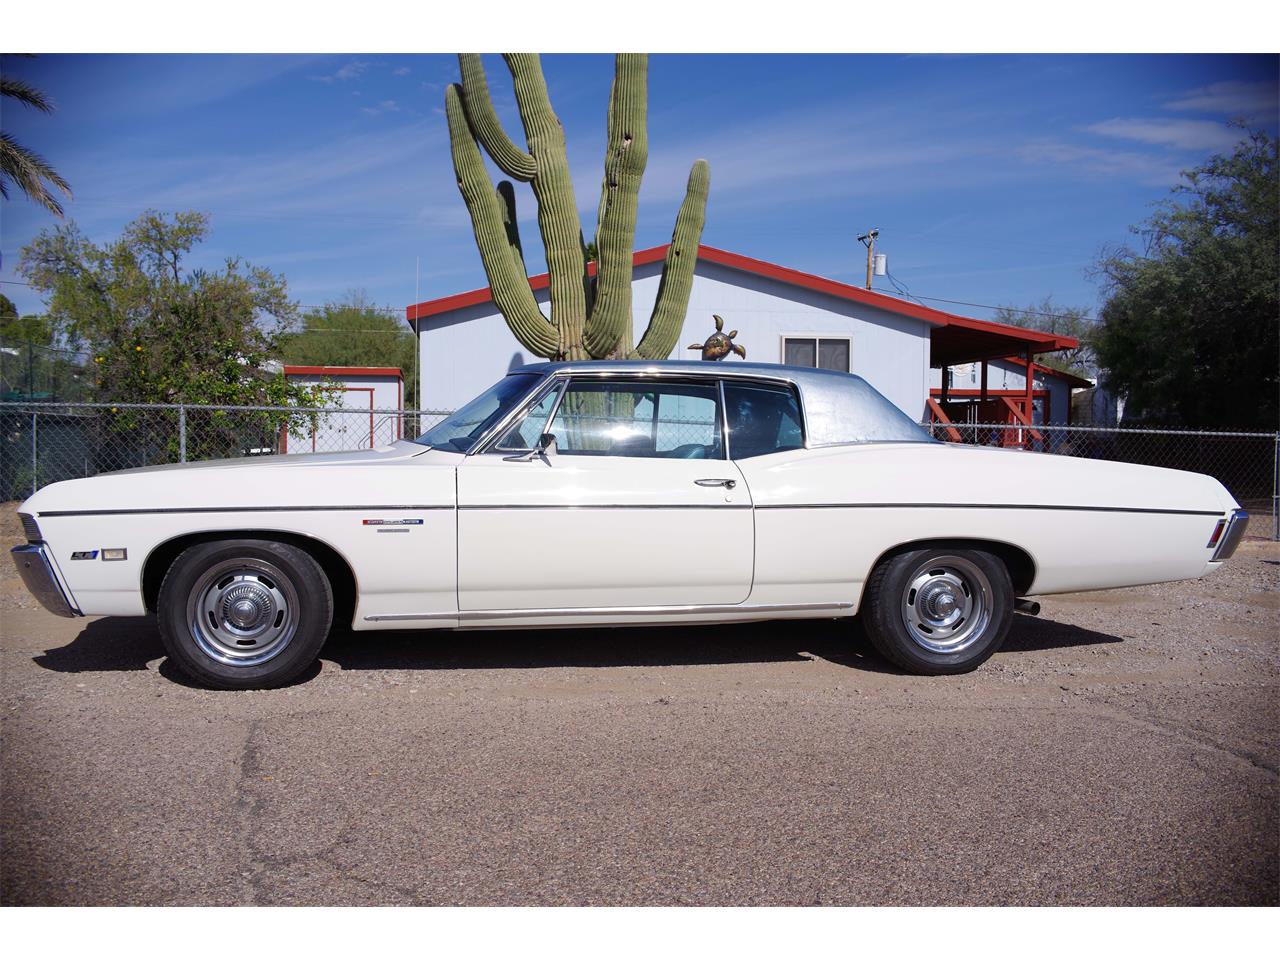 1968 Chevrolet Impala SS in tucson, Arizona